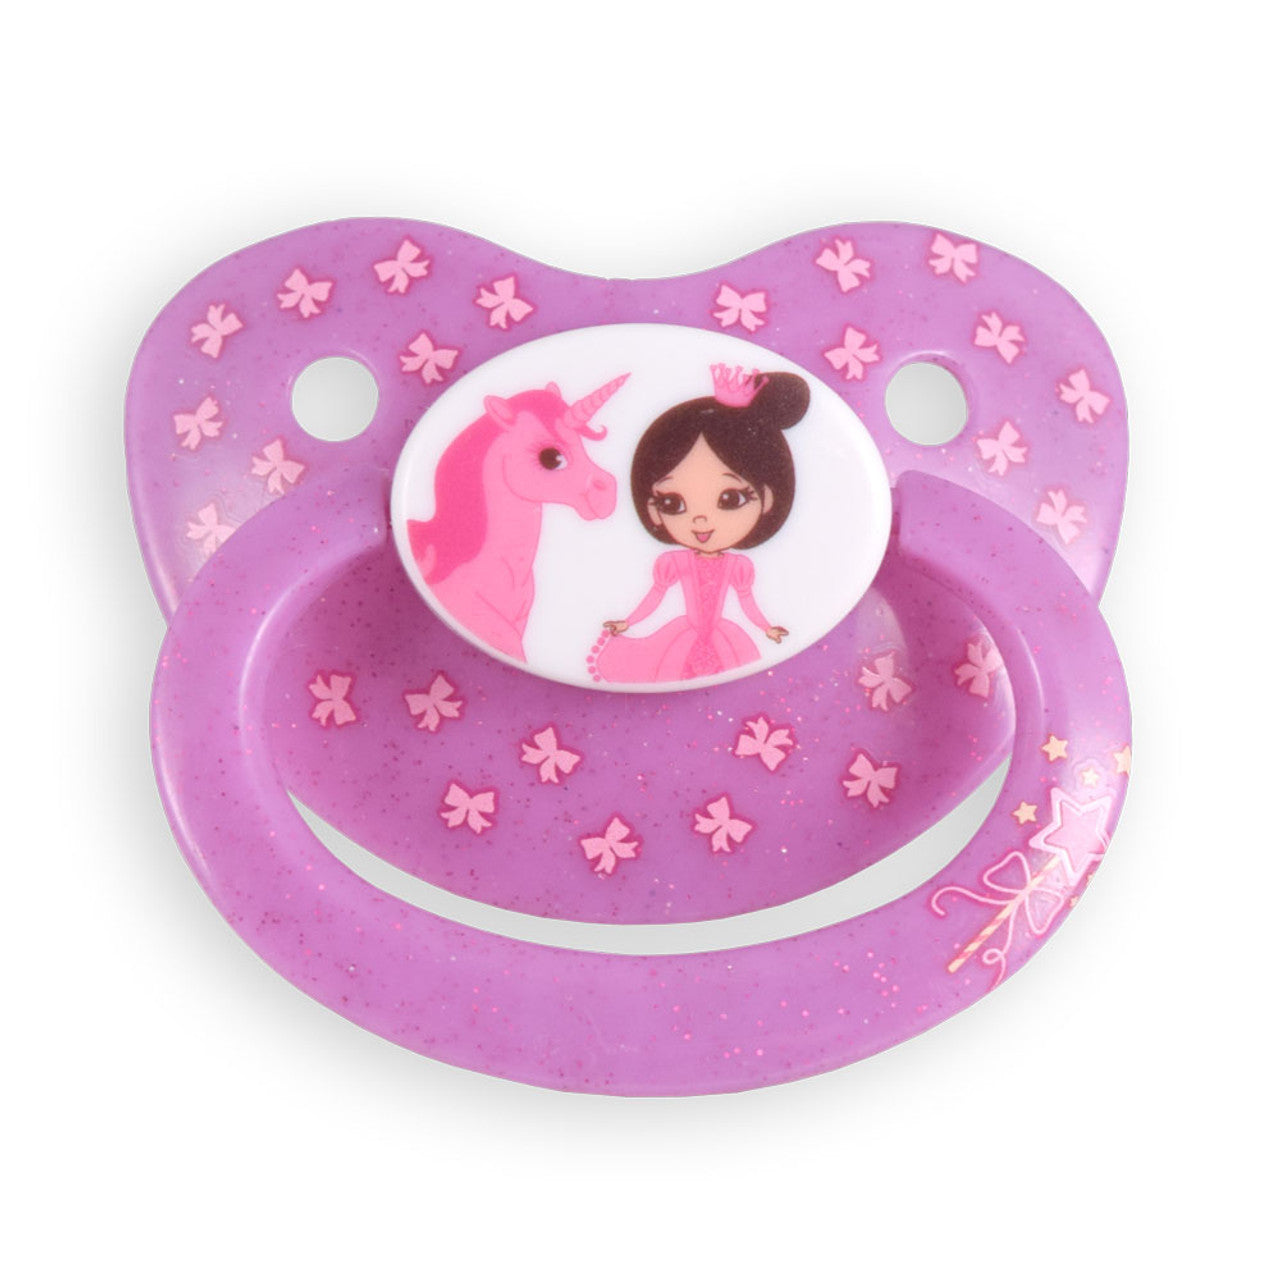 Rearz - Pacifier Set - Princess Pink